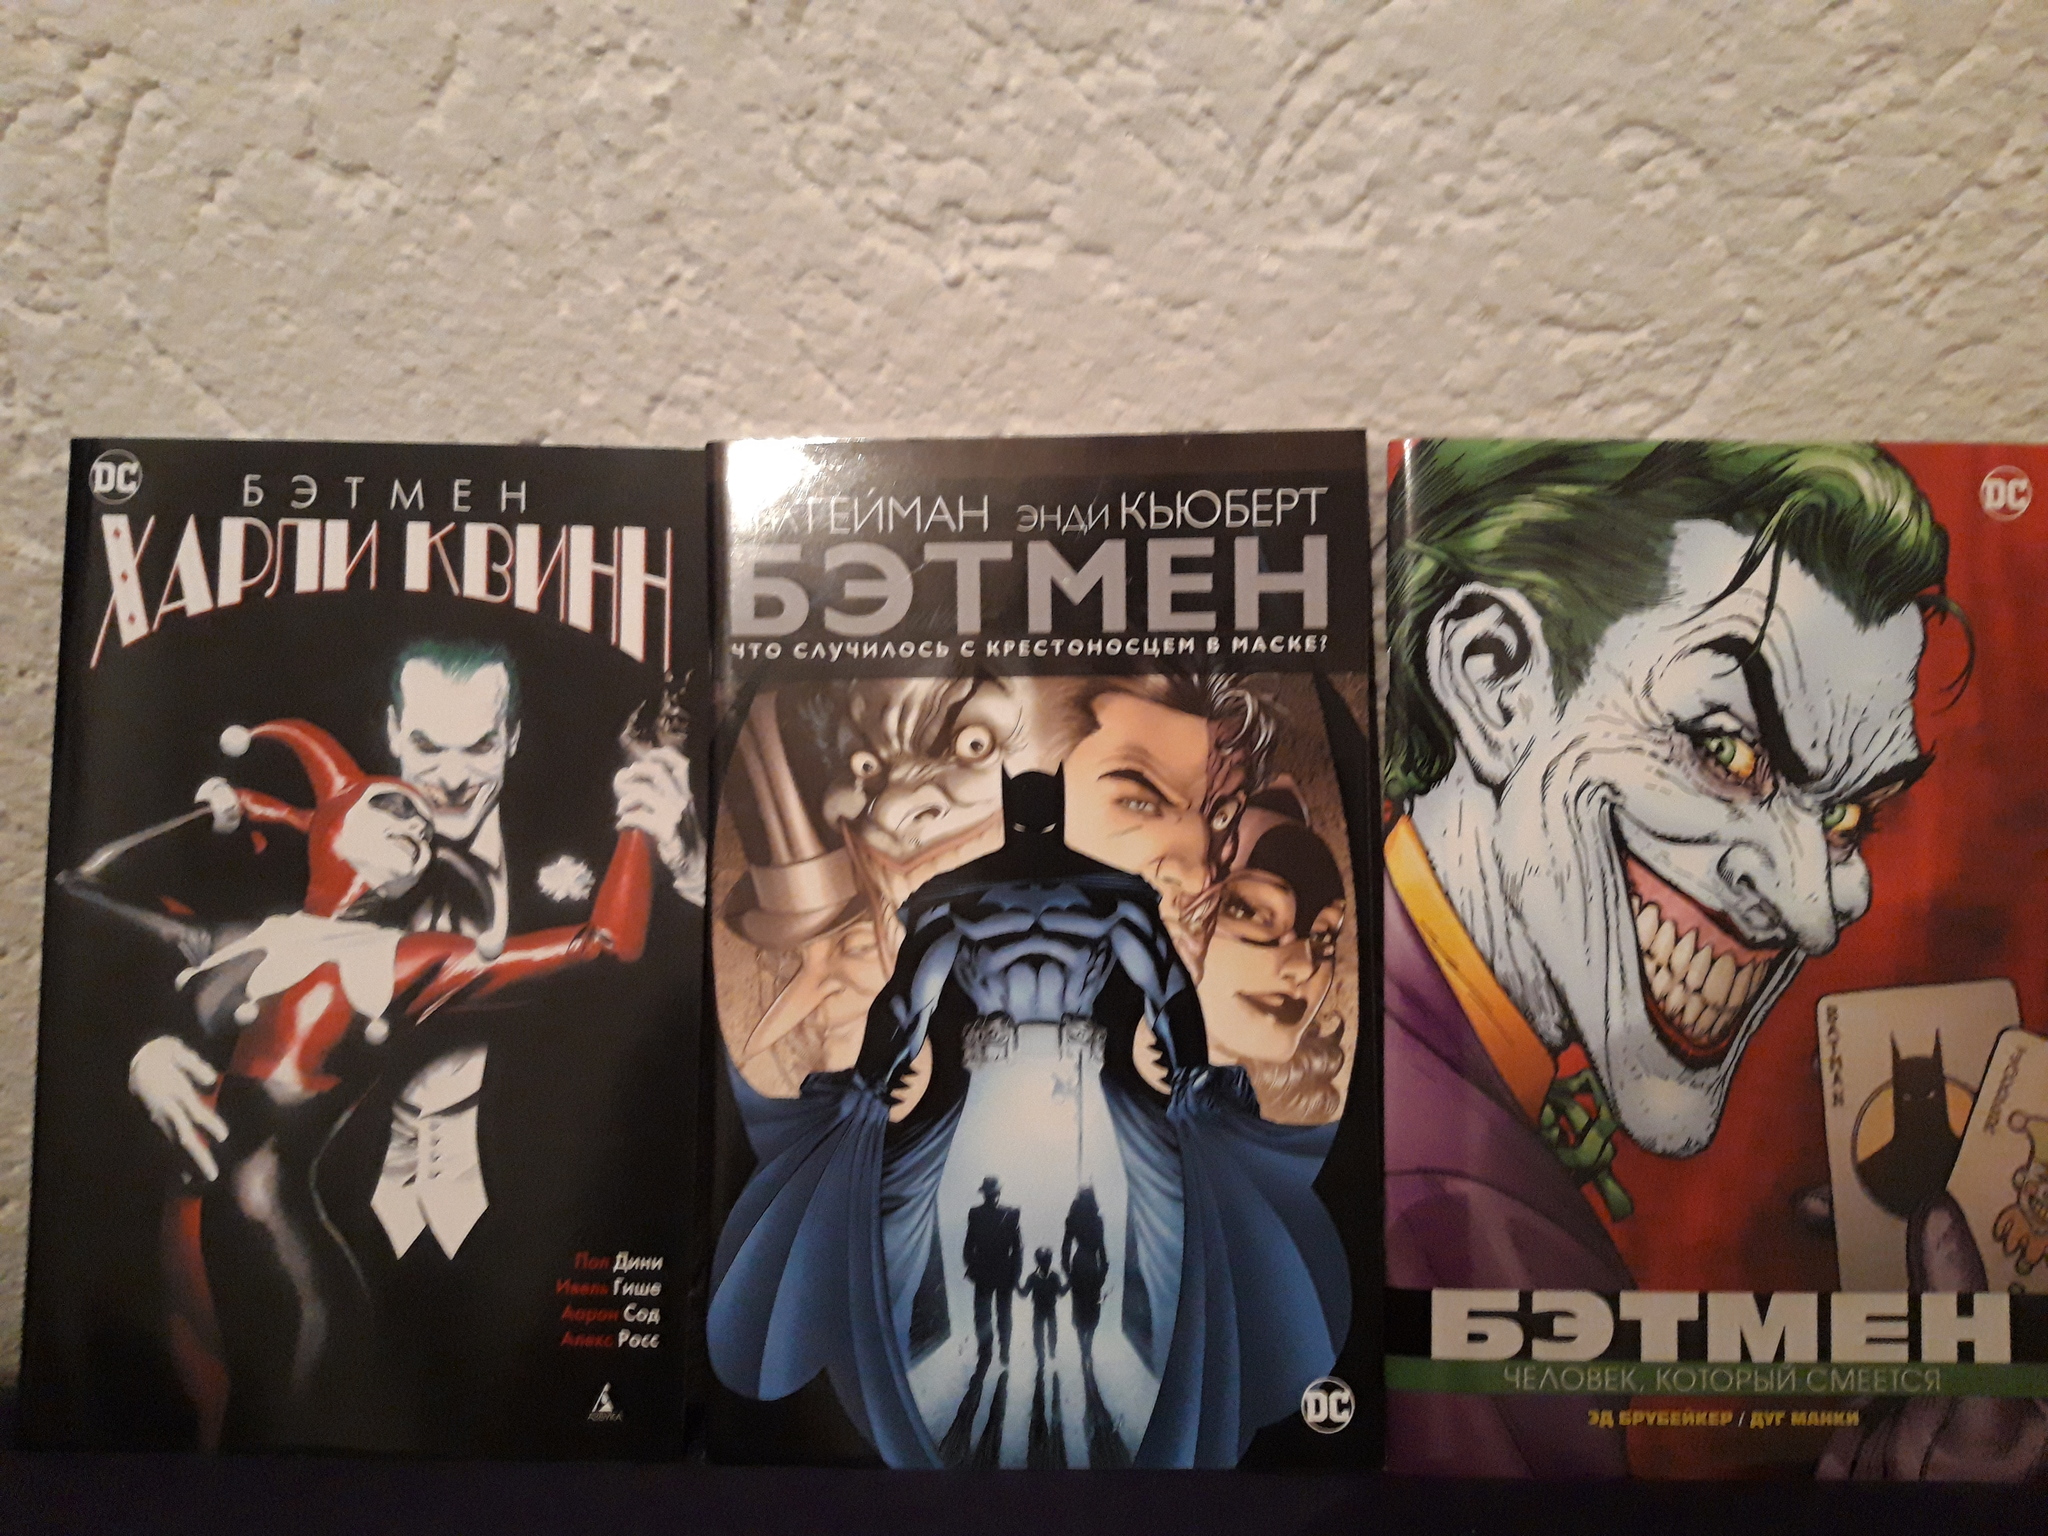 My Batman Collection - Collection, Batman, Comics, Dc comics, Books, GIF, Longpost